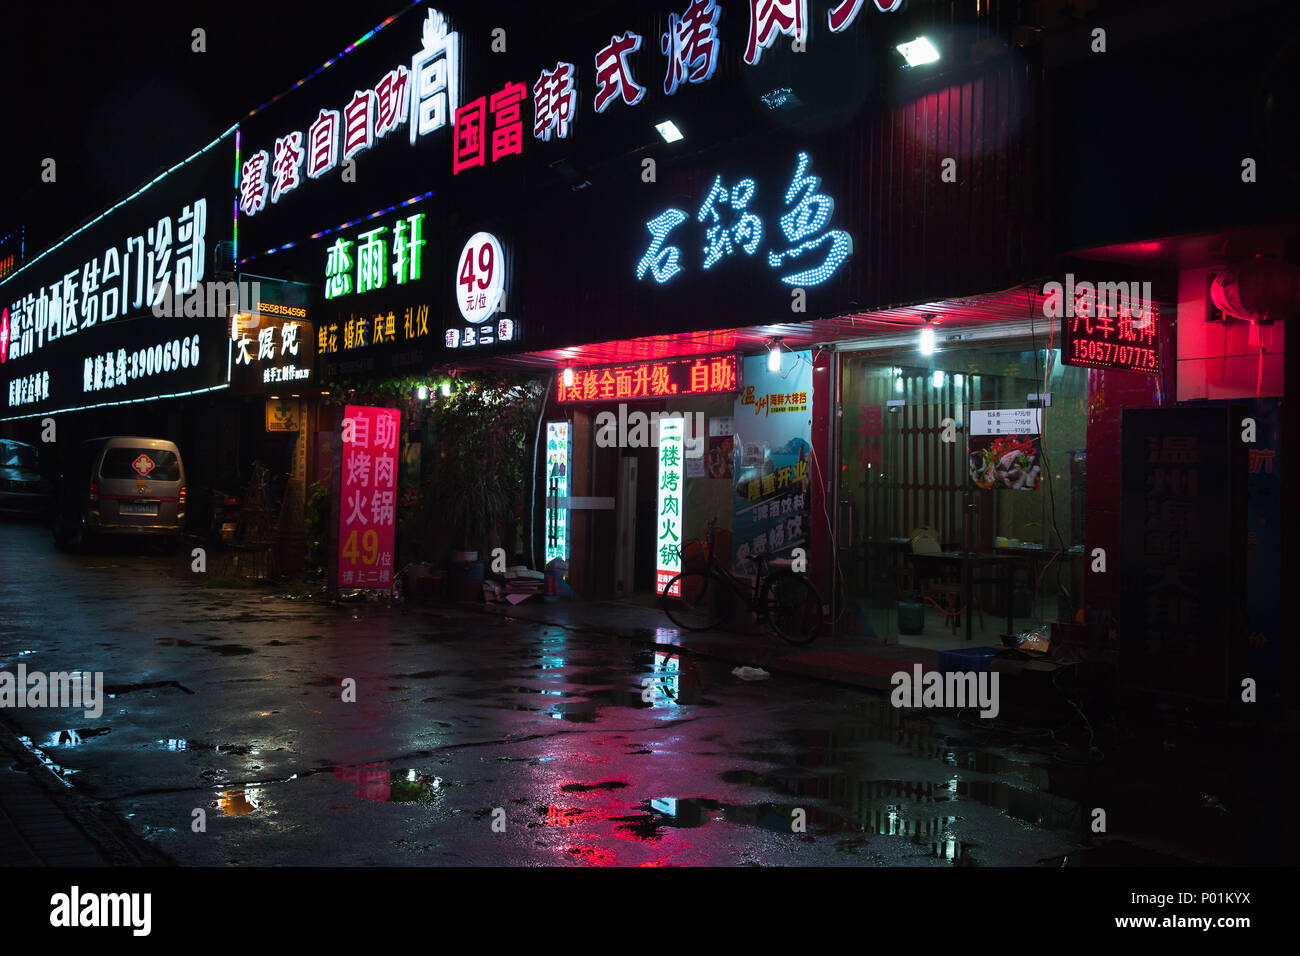 Hangzhou, China - December 3, 2014: Chinese night city street view with advertisement neon lights Stock Photo